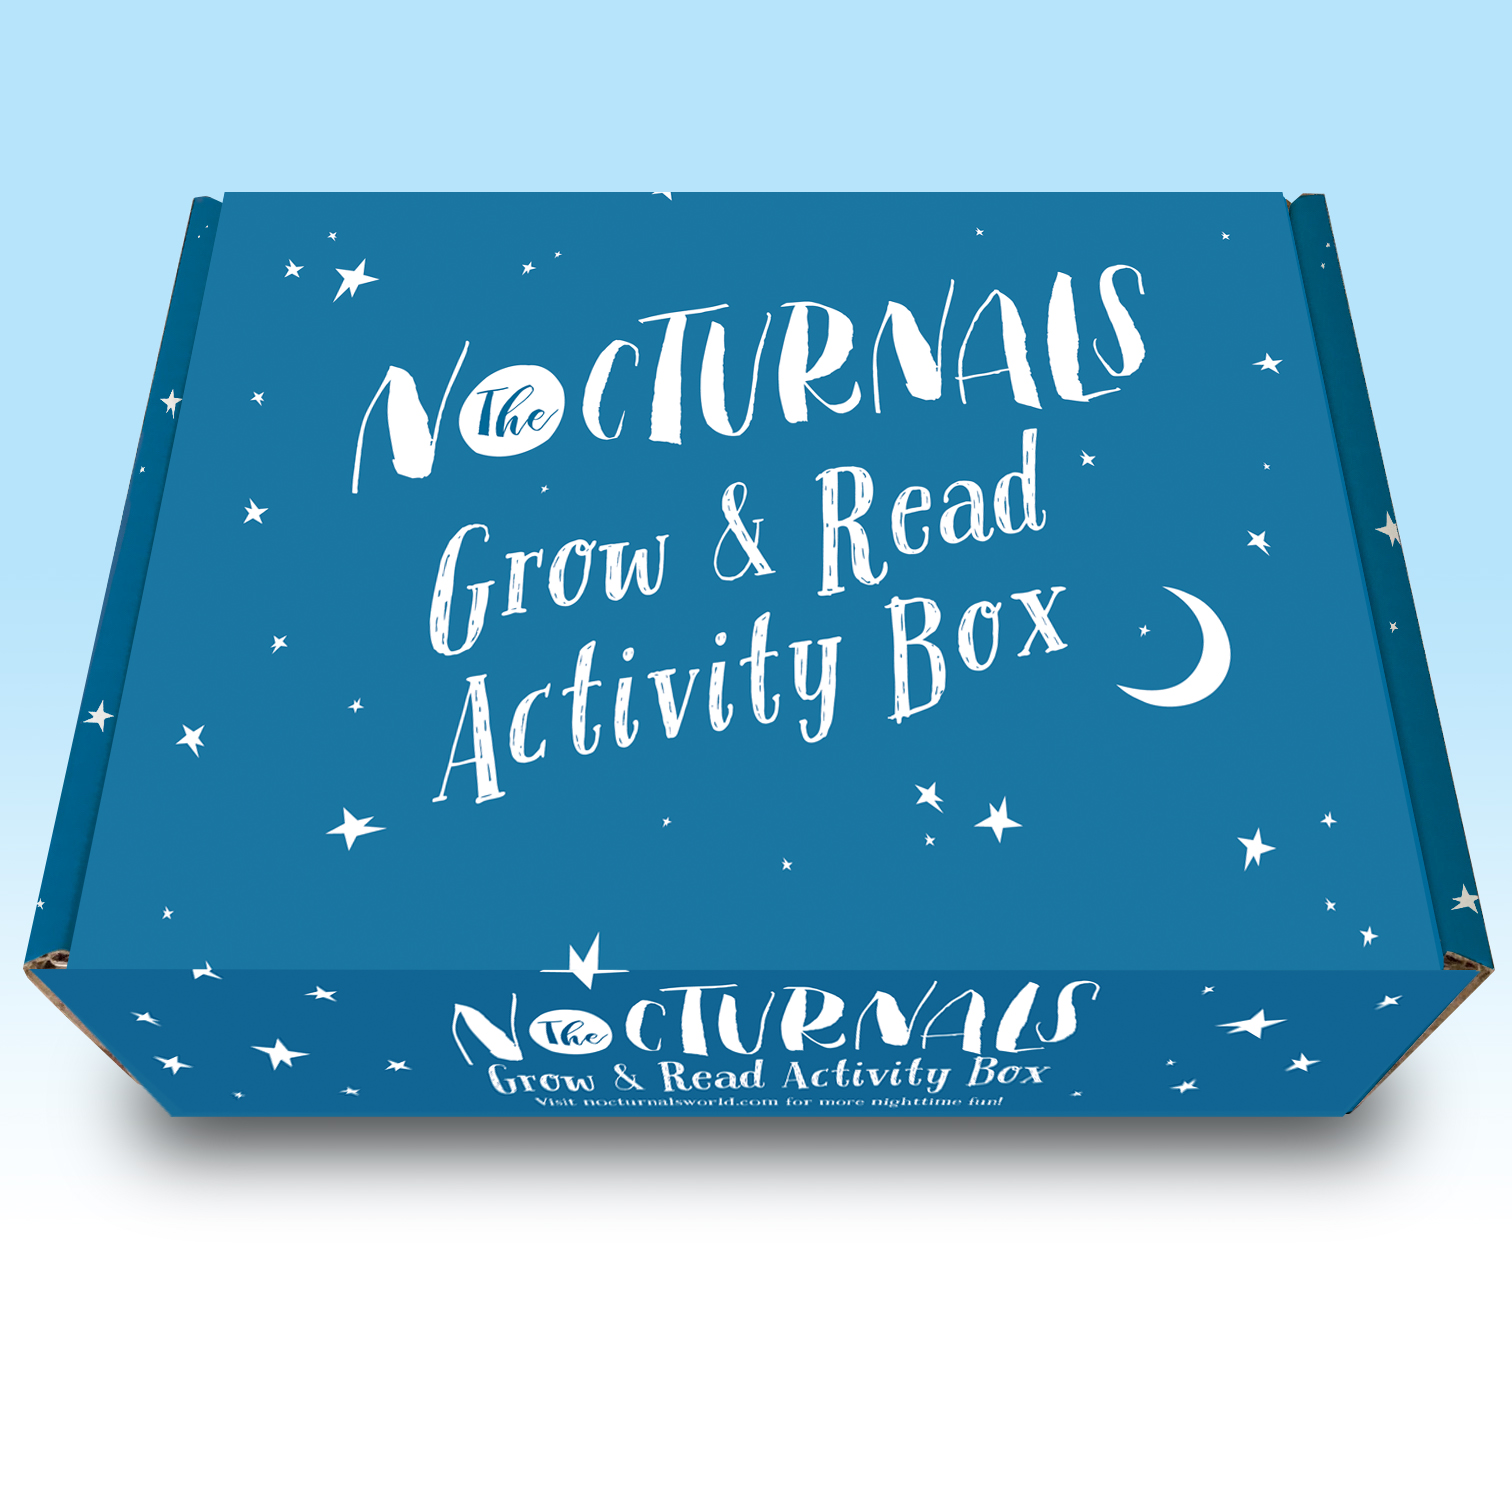 The Nocturnals Adventure Activity Box